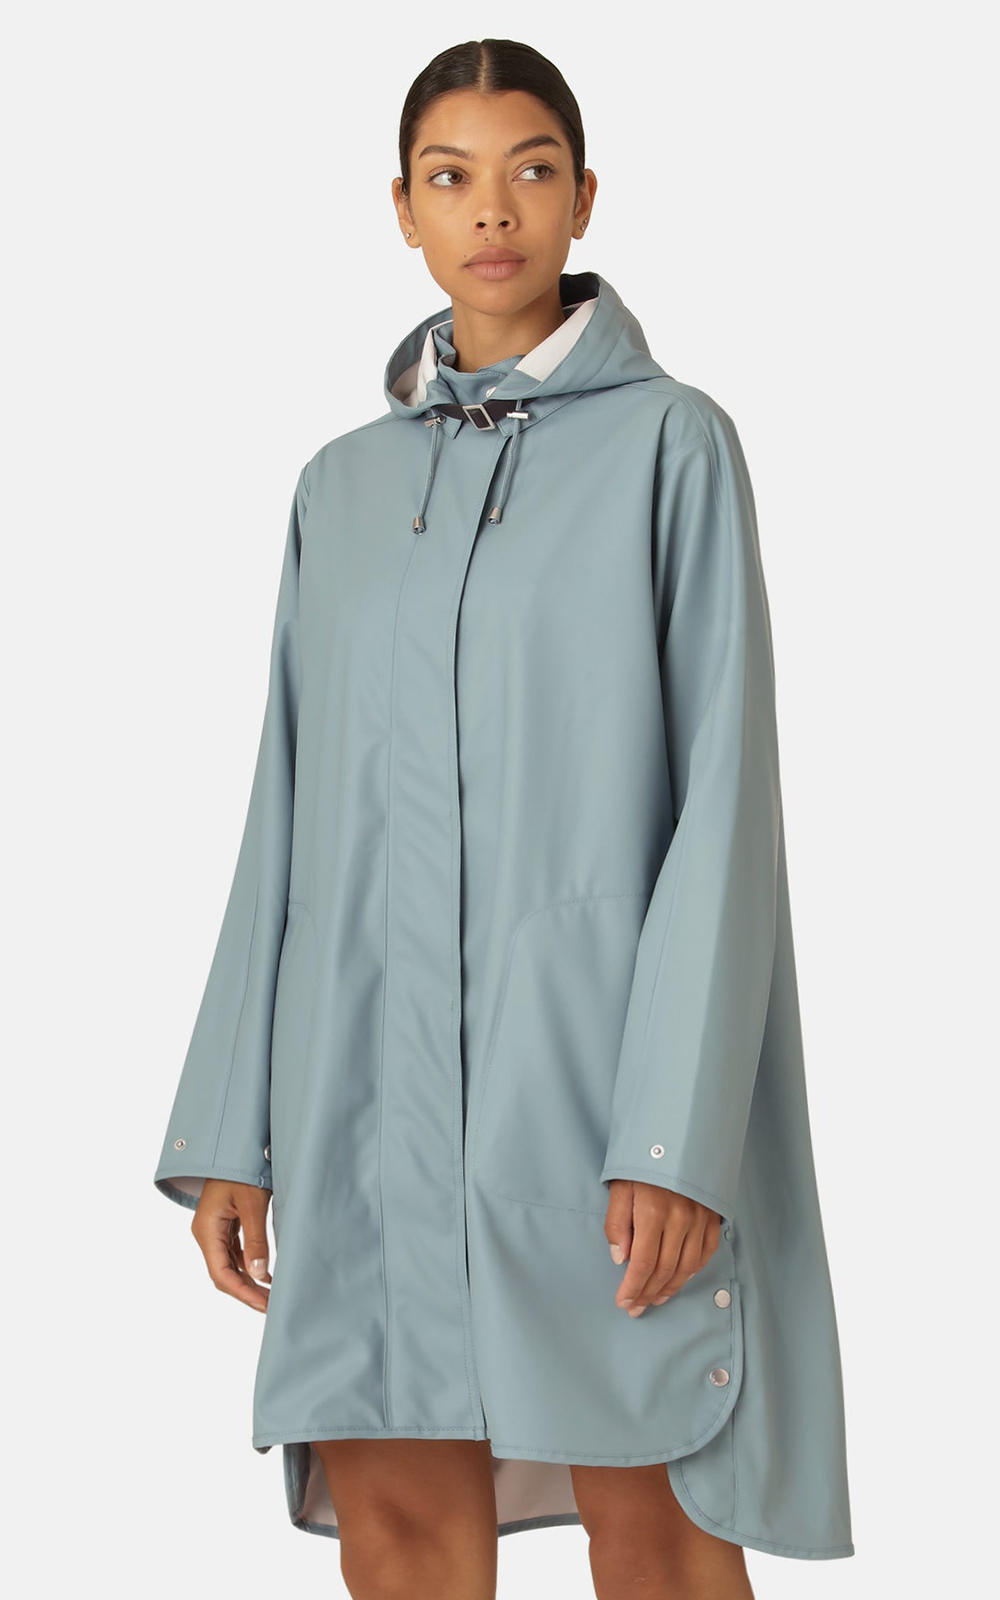 Detachable Hooded Coat  product photo.